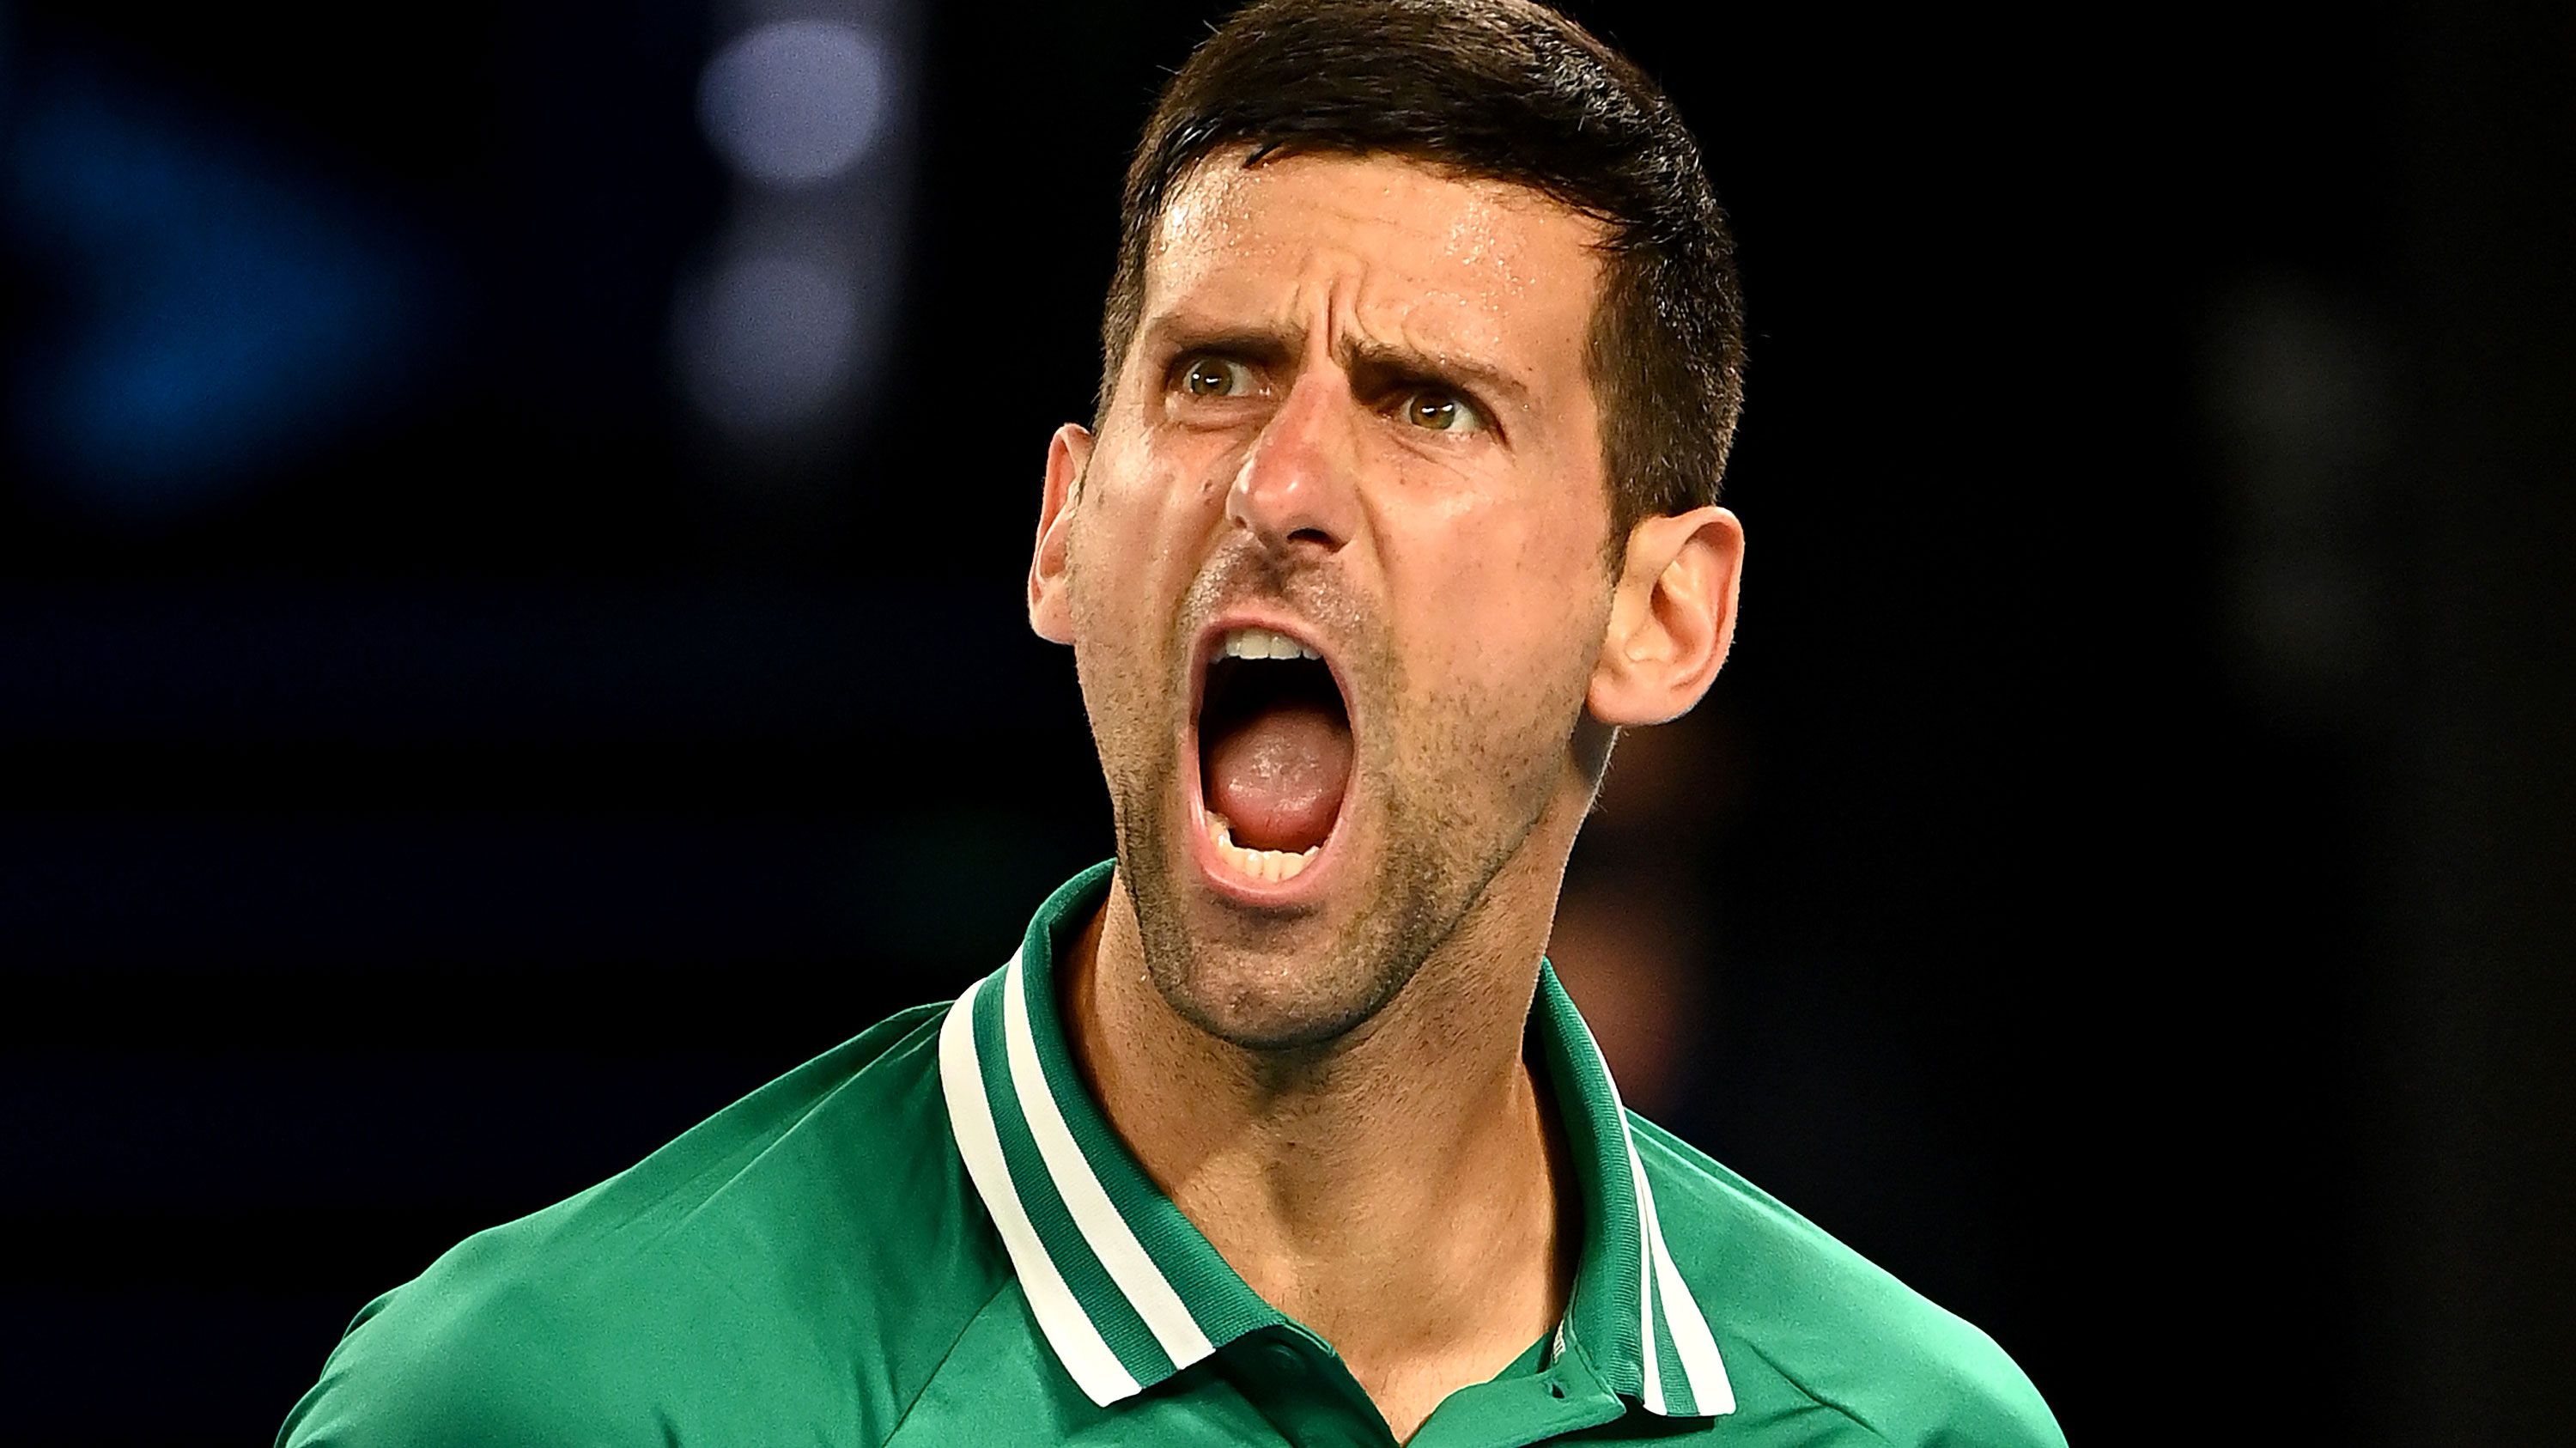 Novak Djokovic yells at the Rod laver Arena crowd.